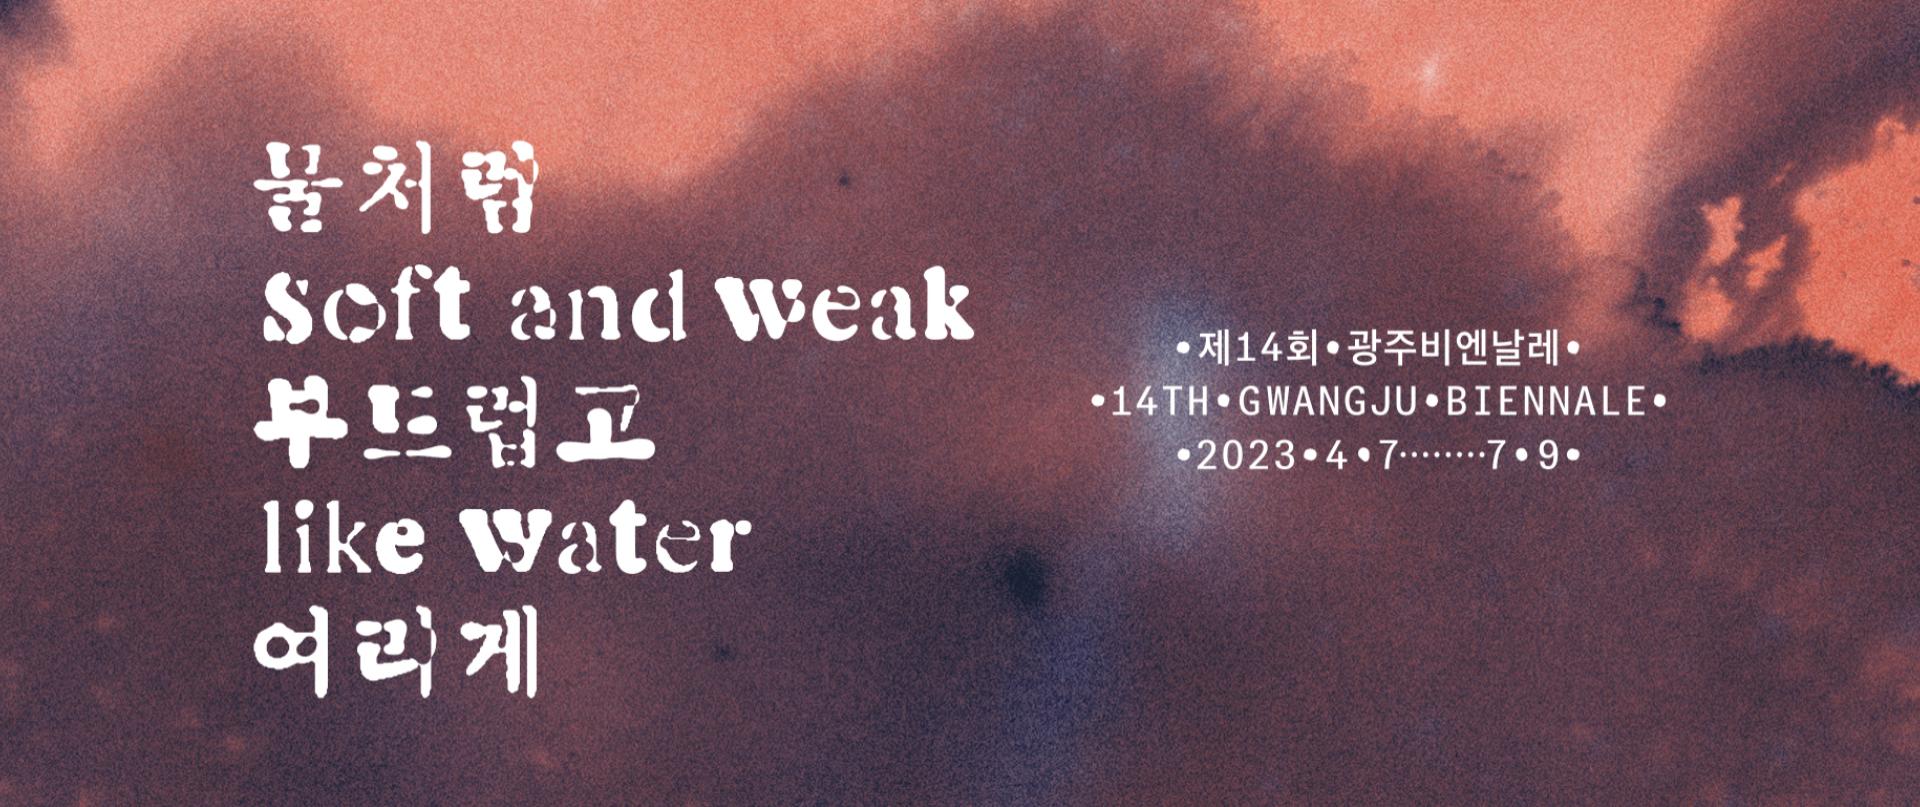 14th Gwangju Biennale 